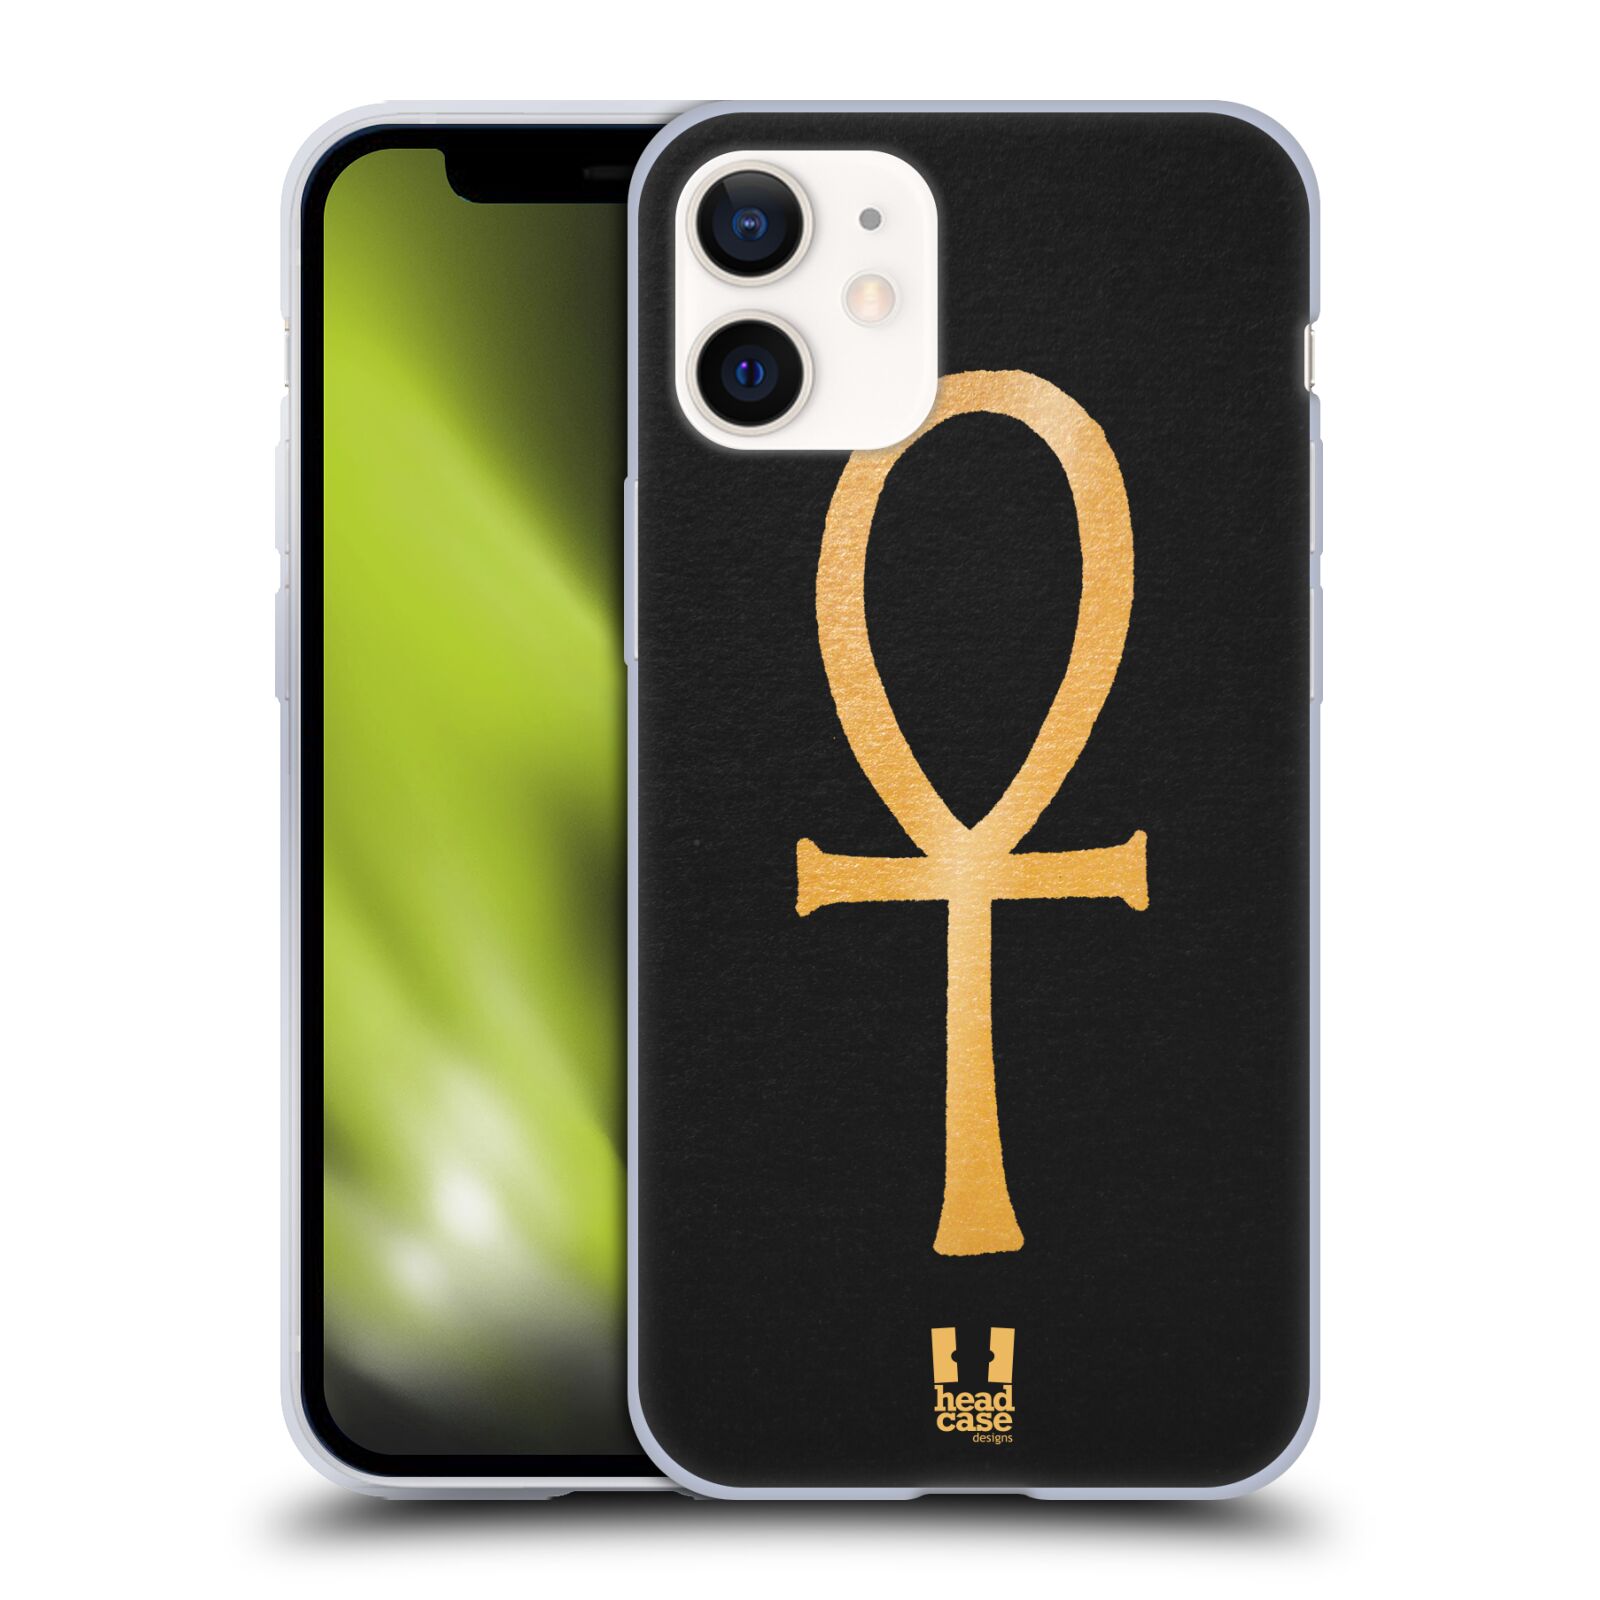 Plastový obal na mobil Apple Iphone 12 MINI vzor EGYPT zlatá a černá SYMBOL ŽIVOTA